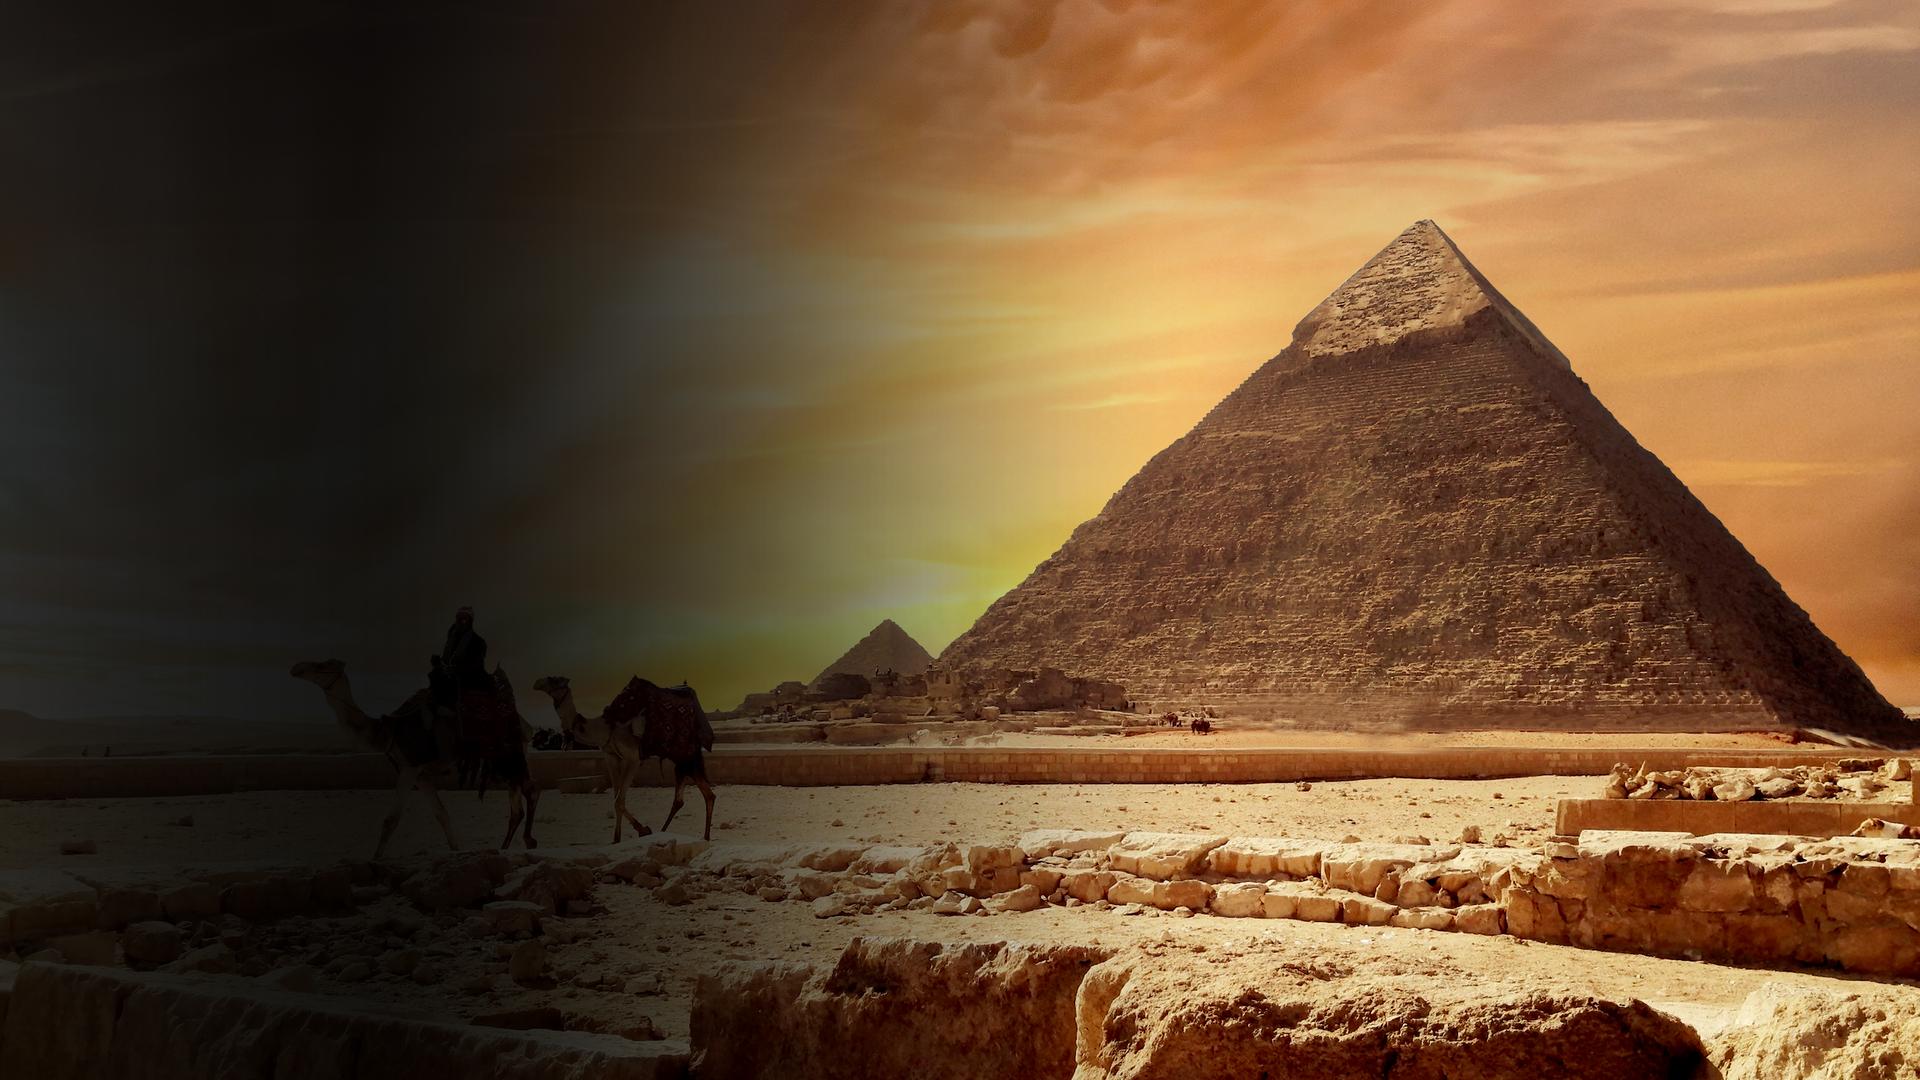 Eternal Egypt 4K